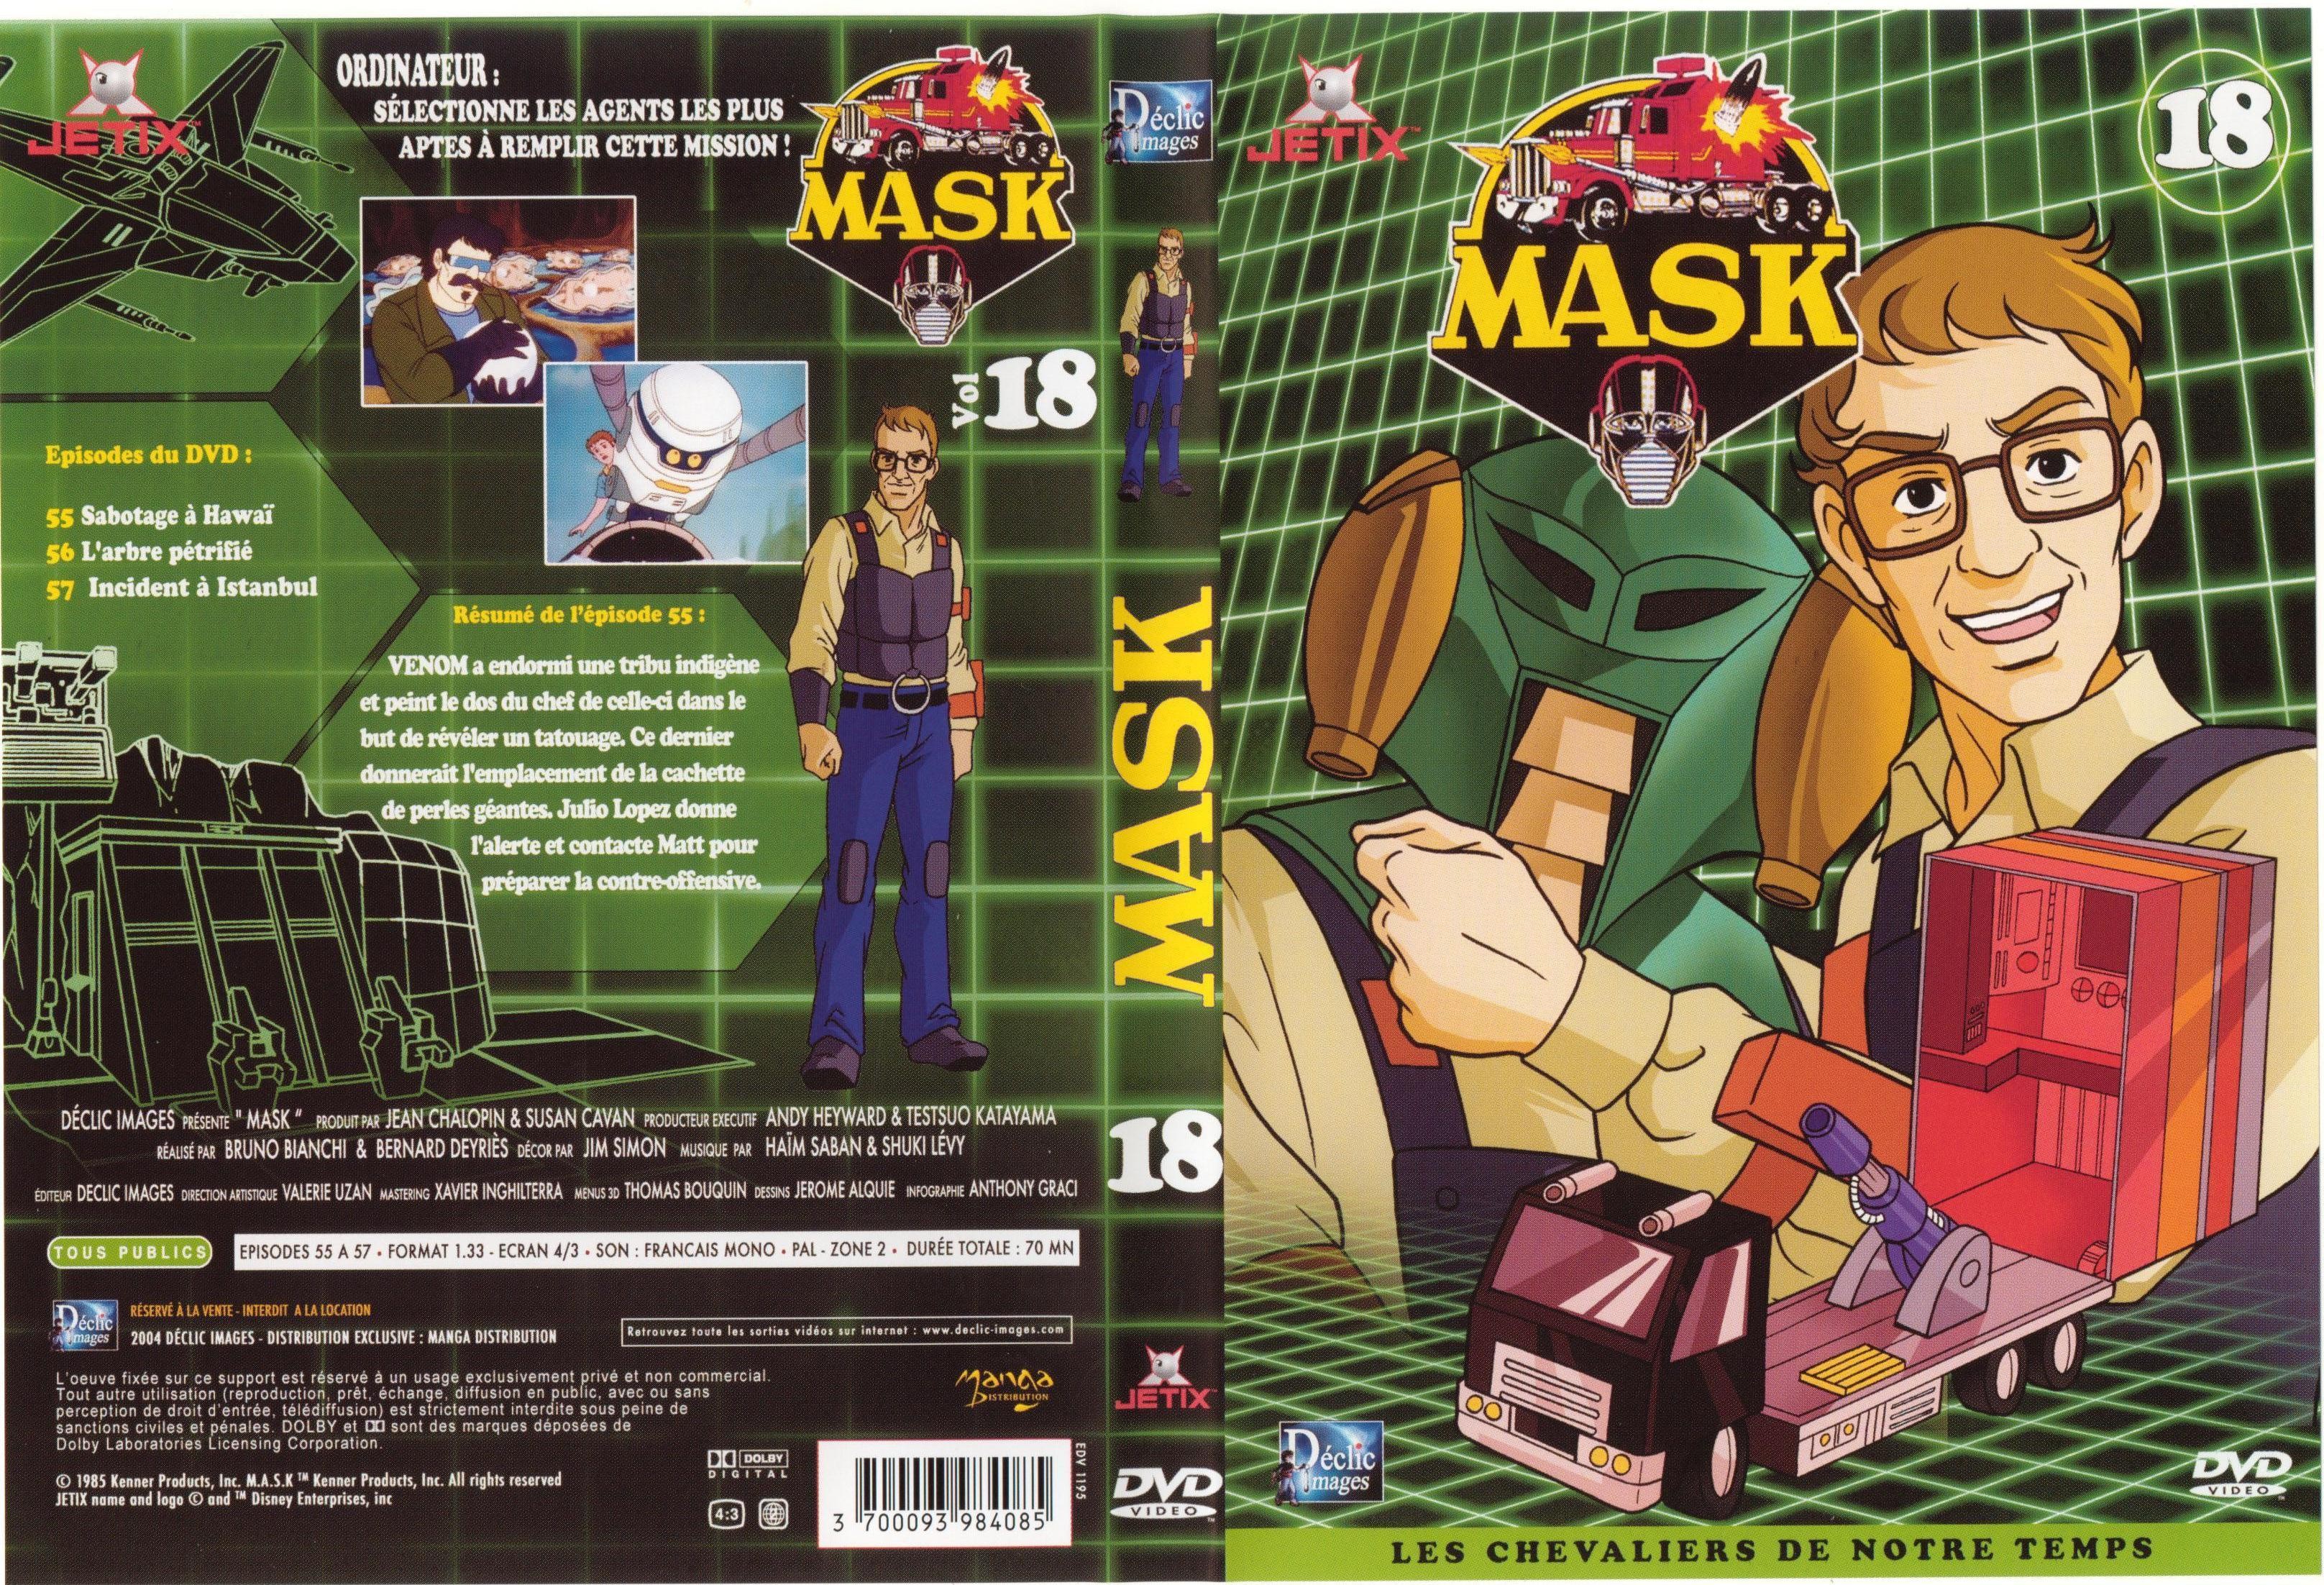 Jaquette DVD Mask vol 18